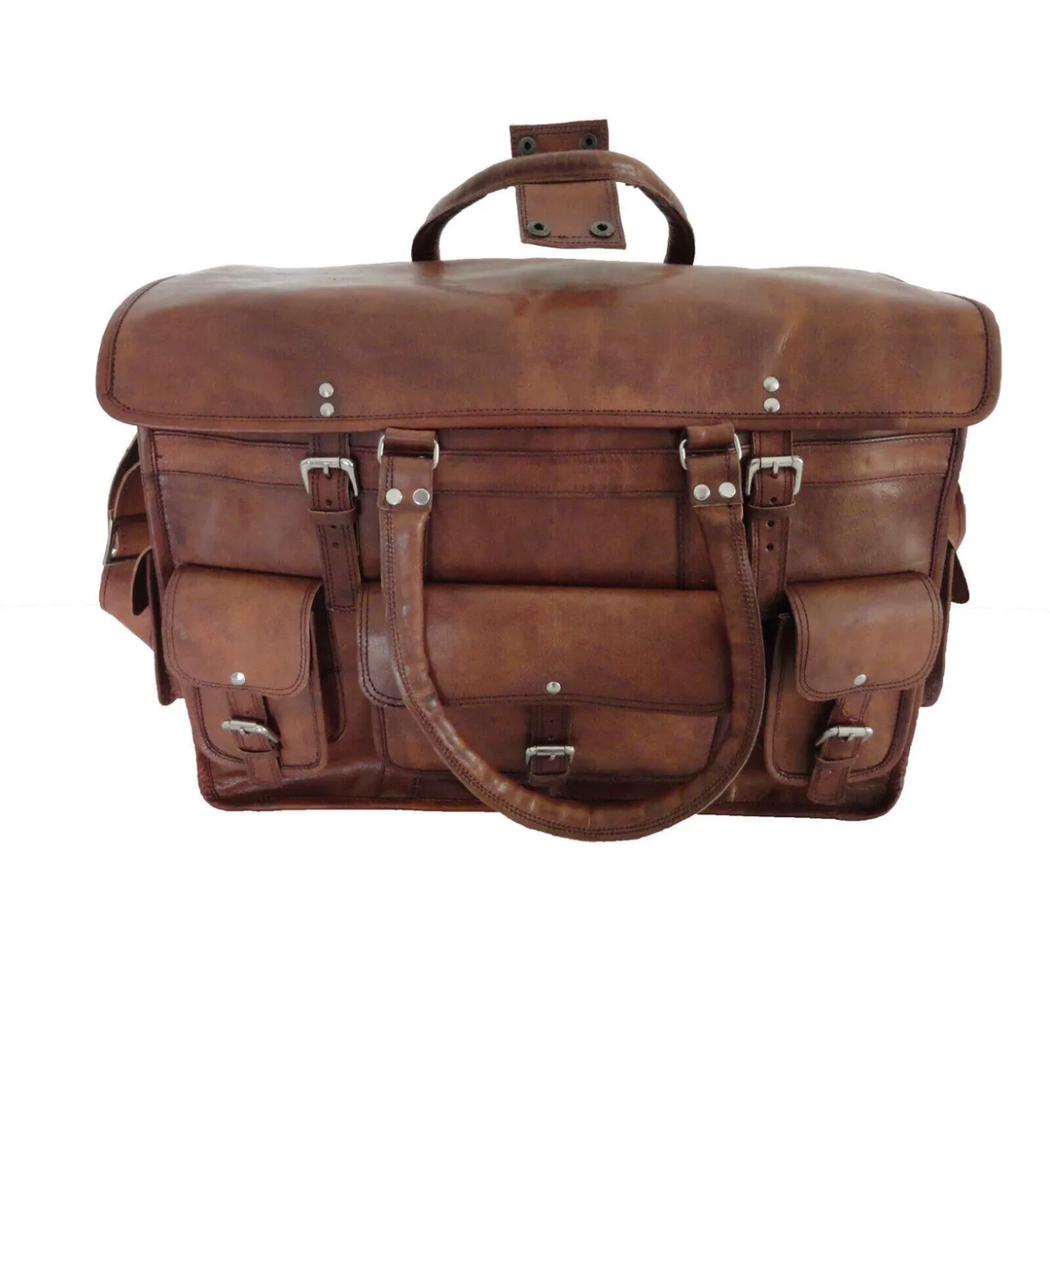 Briefcase Bag Crossbody Messenger College Bags For Men Women